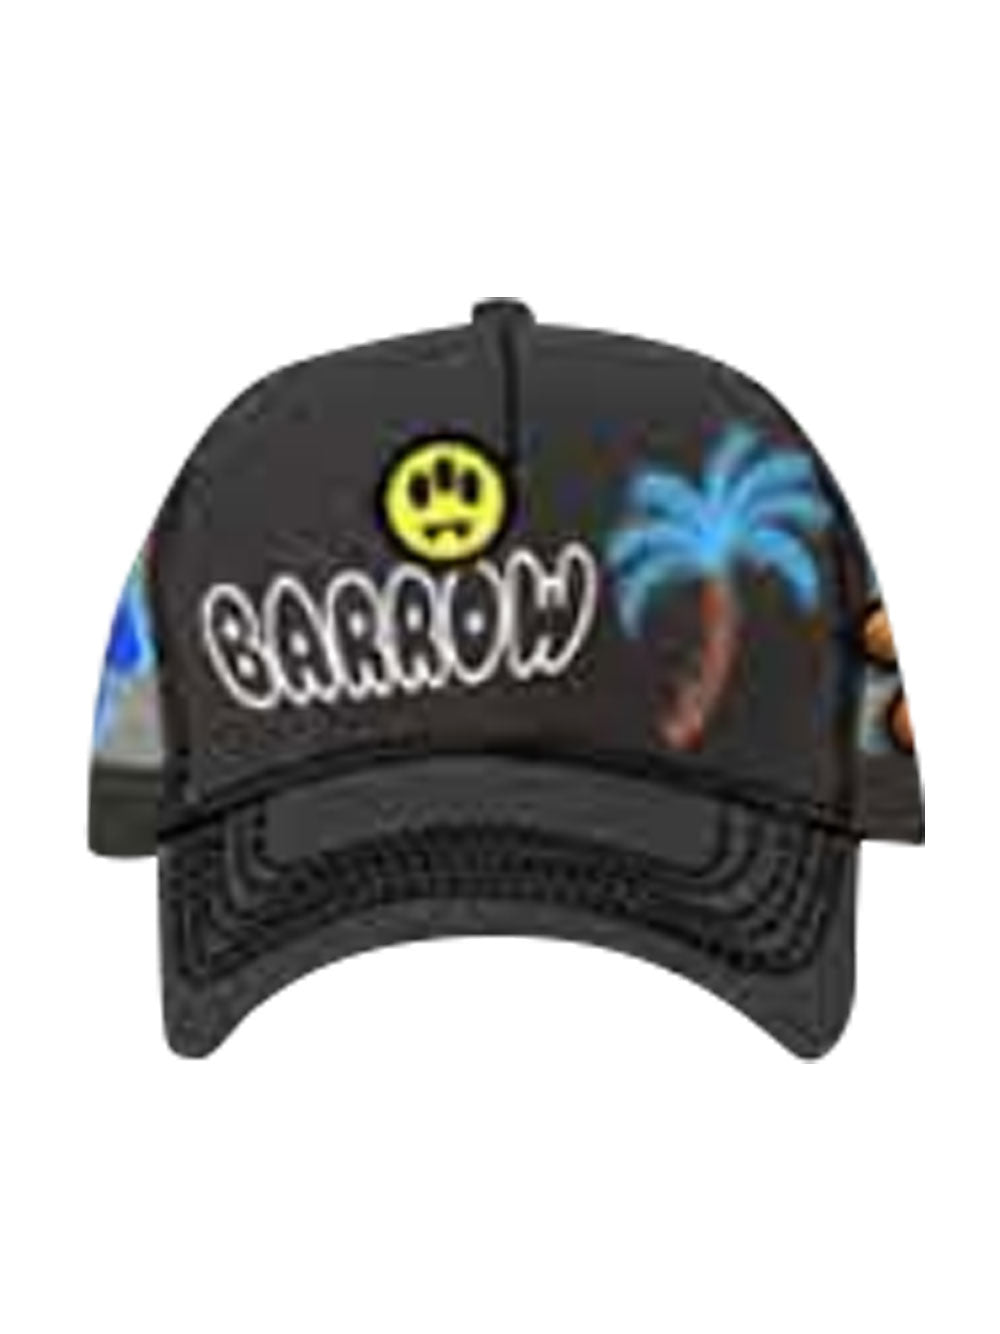 Nero Trucker Hat